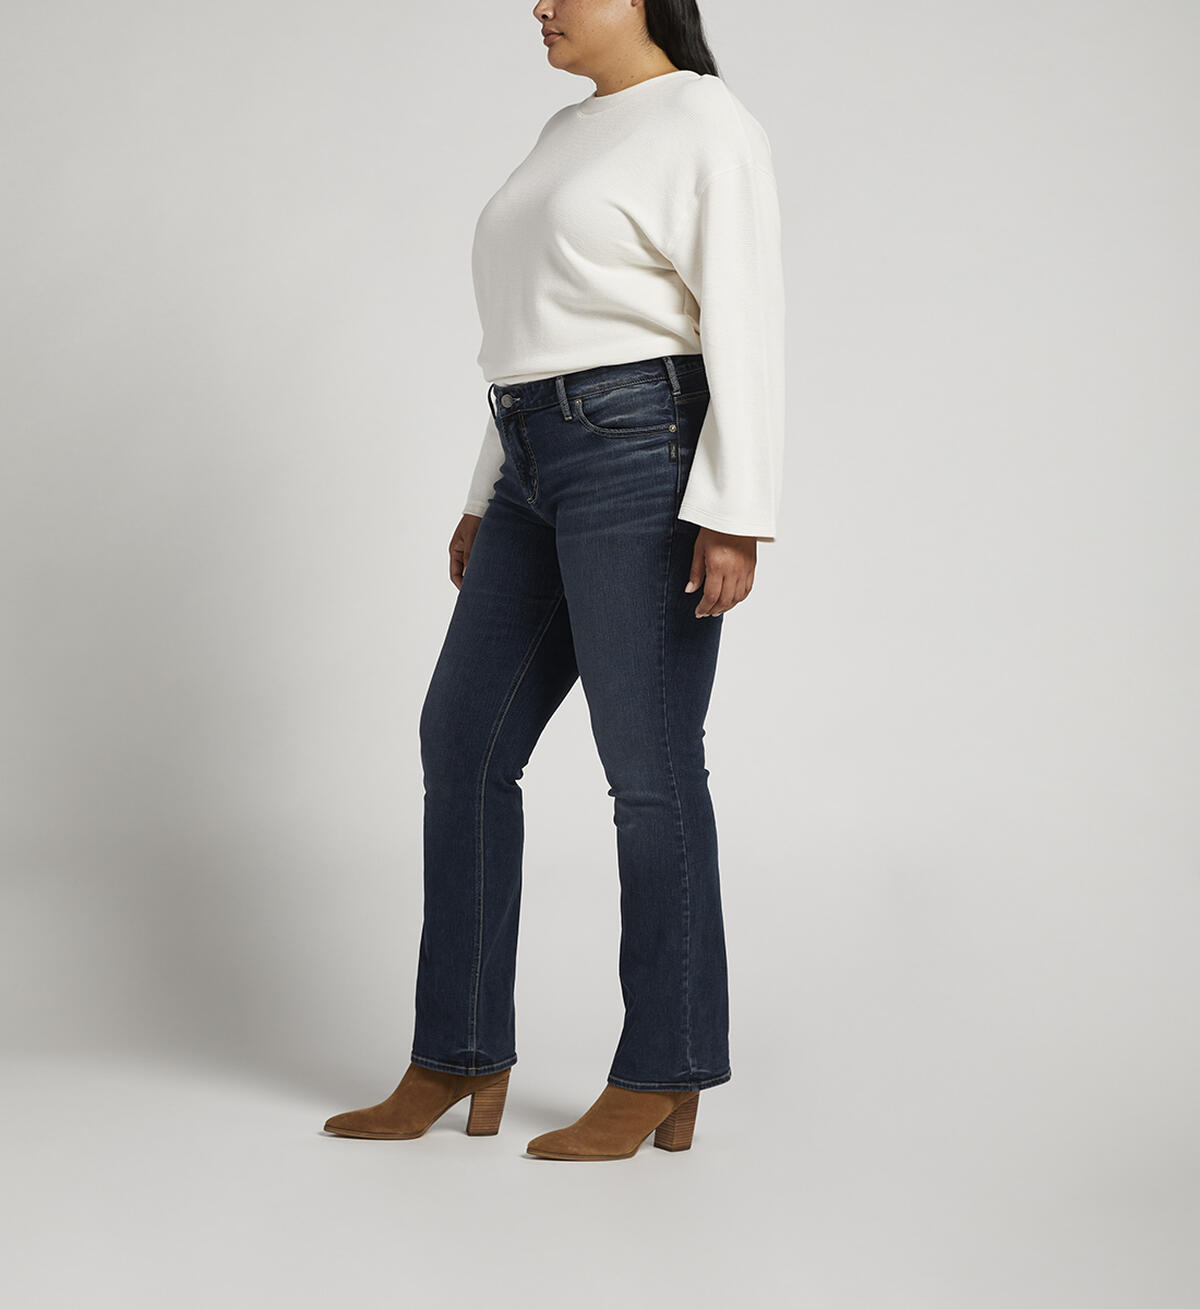 Elyse Mid Rise Slim Bootcut Jeans Plus Size, Indigo, hi-res image number 2